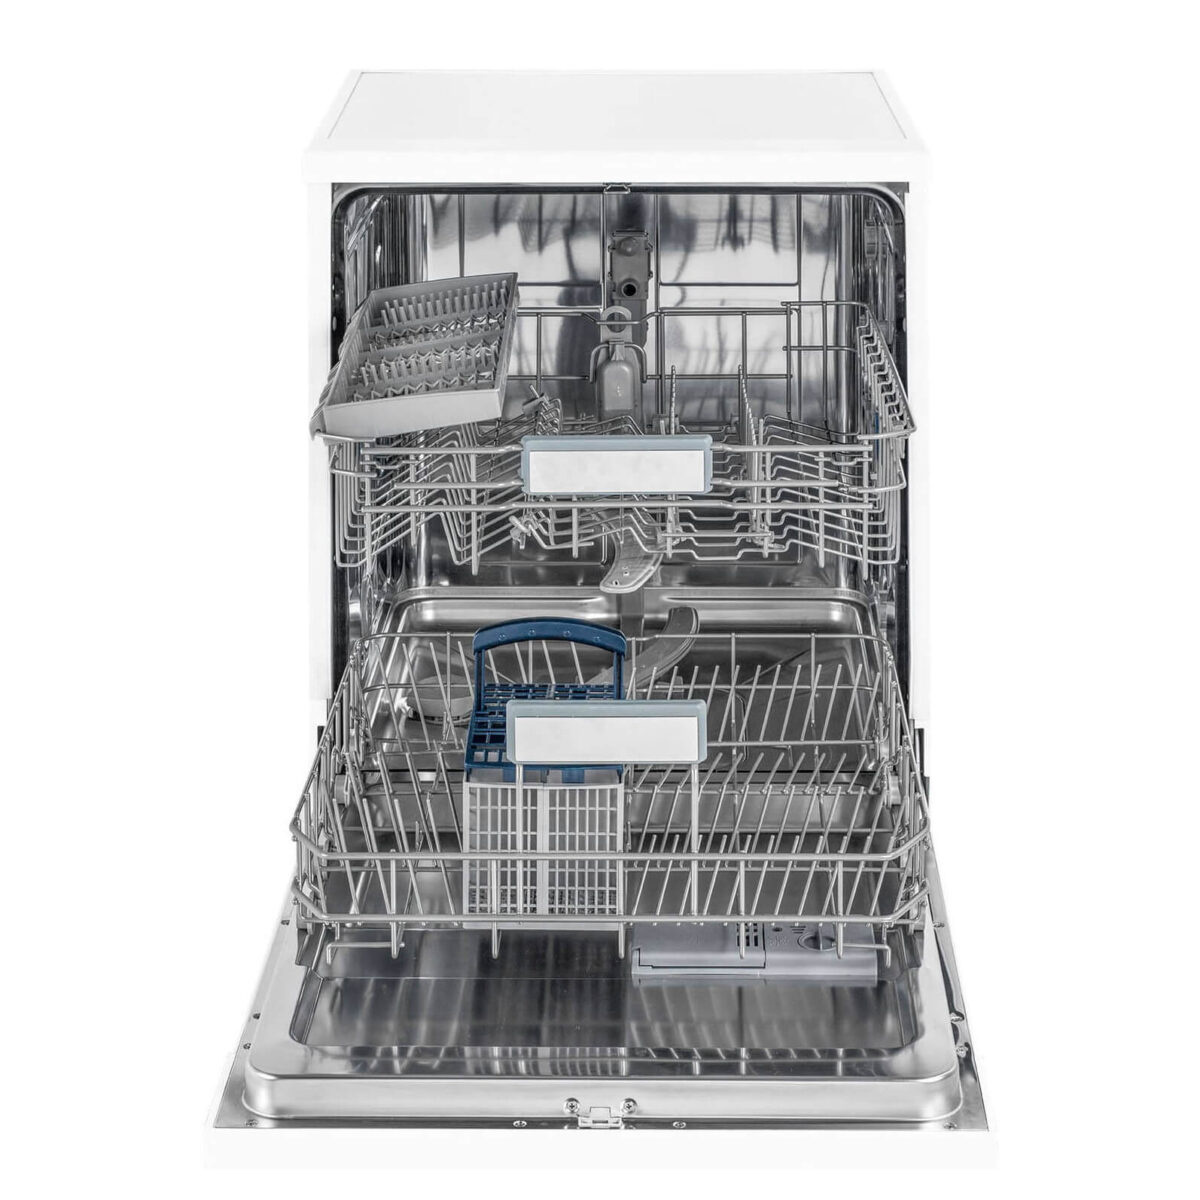 ماشین ظرفشویی snowa سری کلین پاور مدل 246W